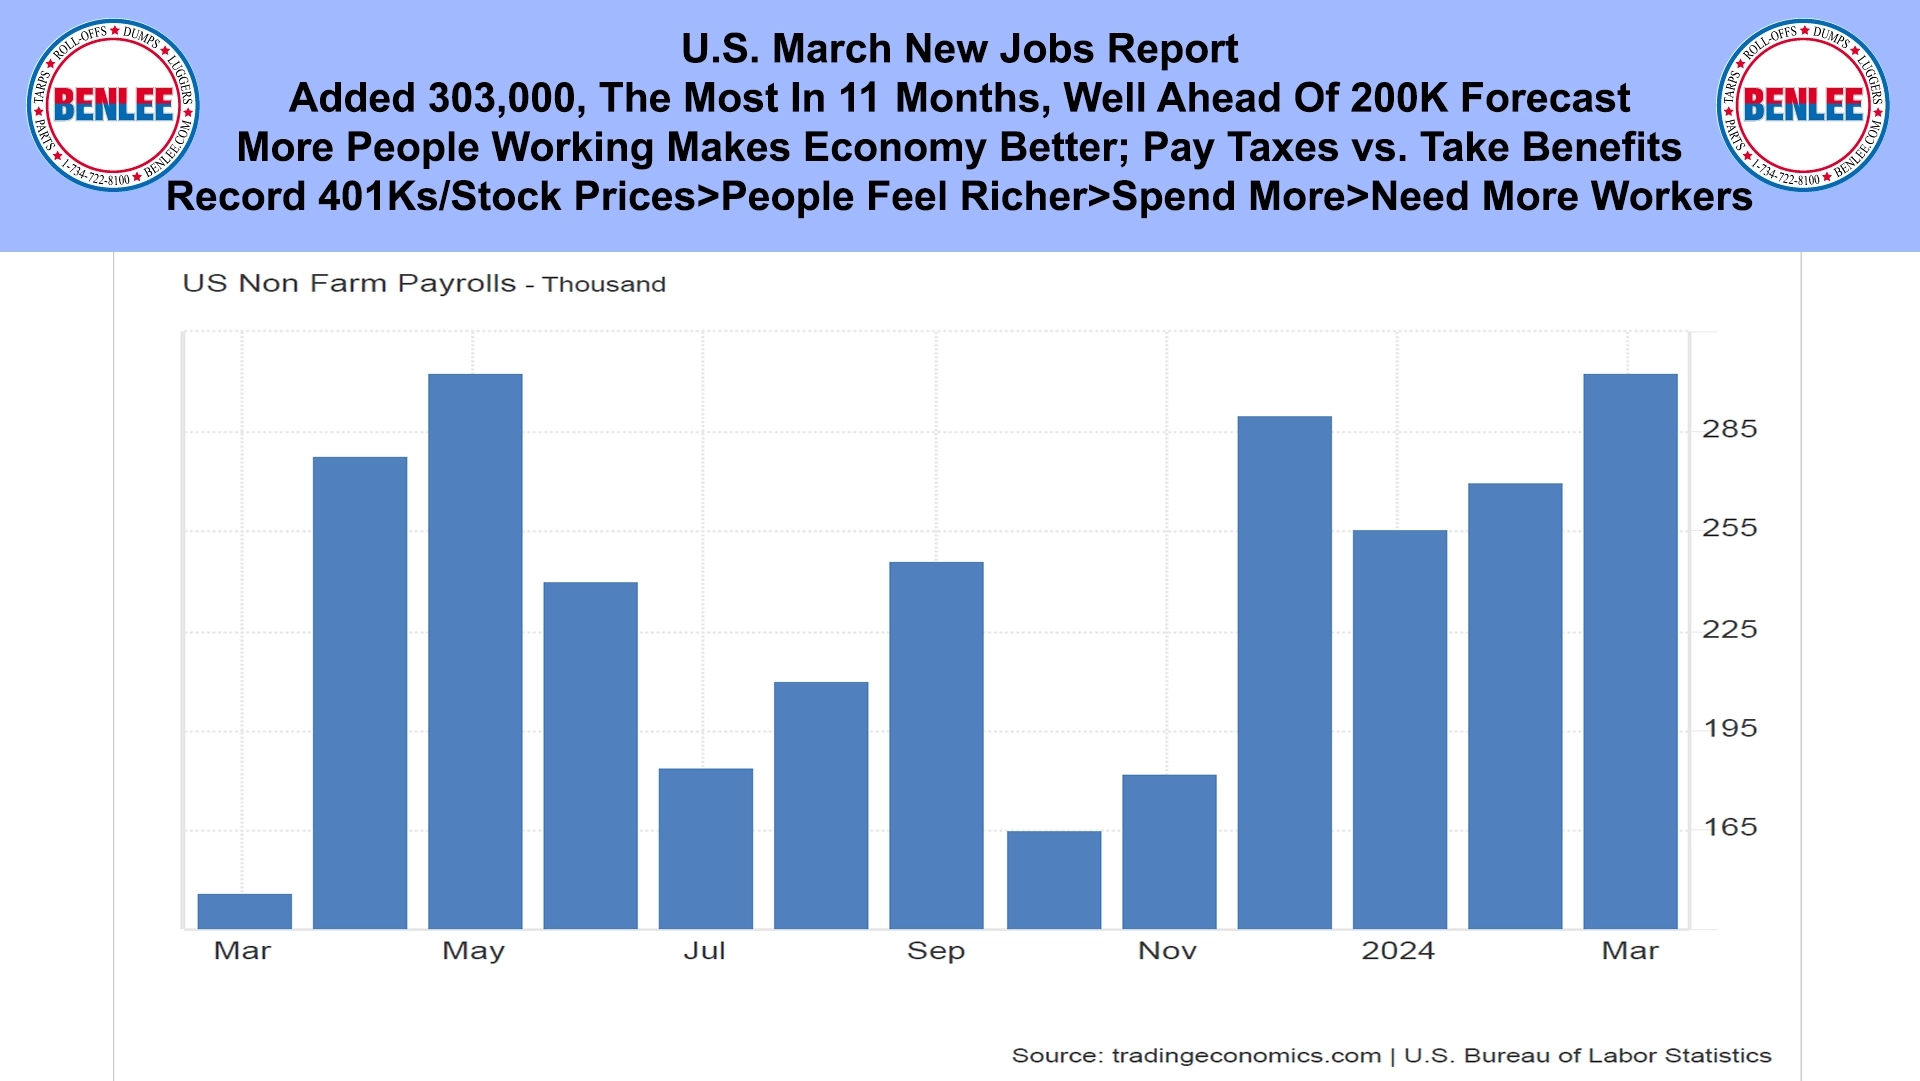 U.S. March New Jobs Report